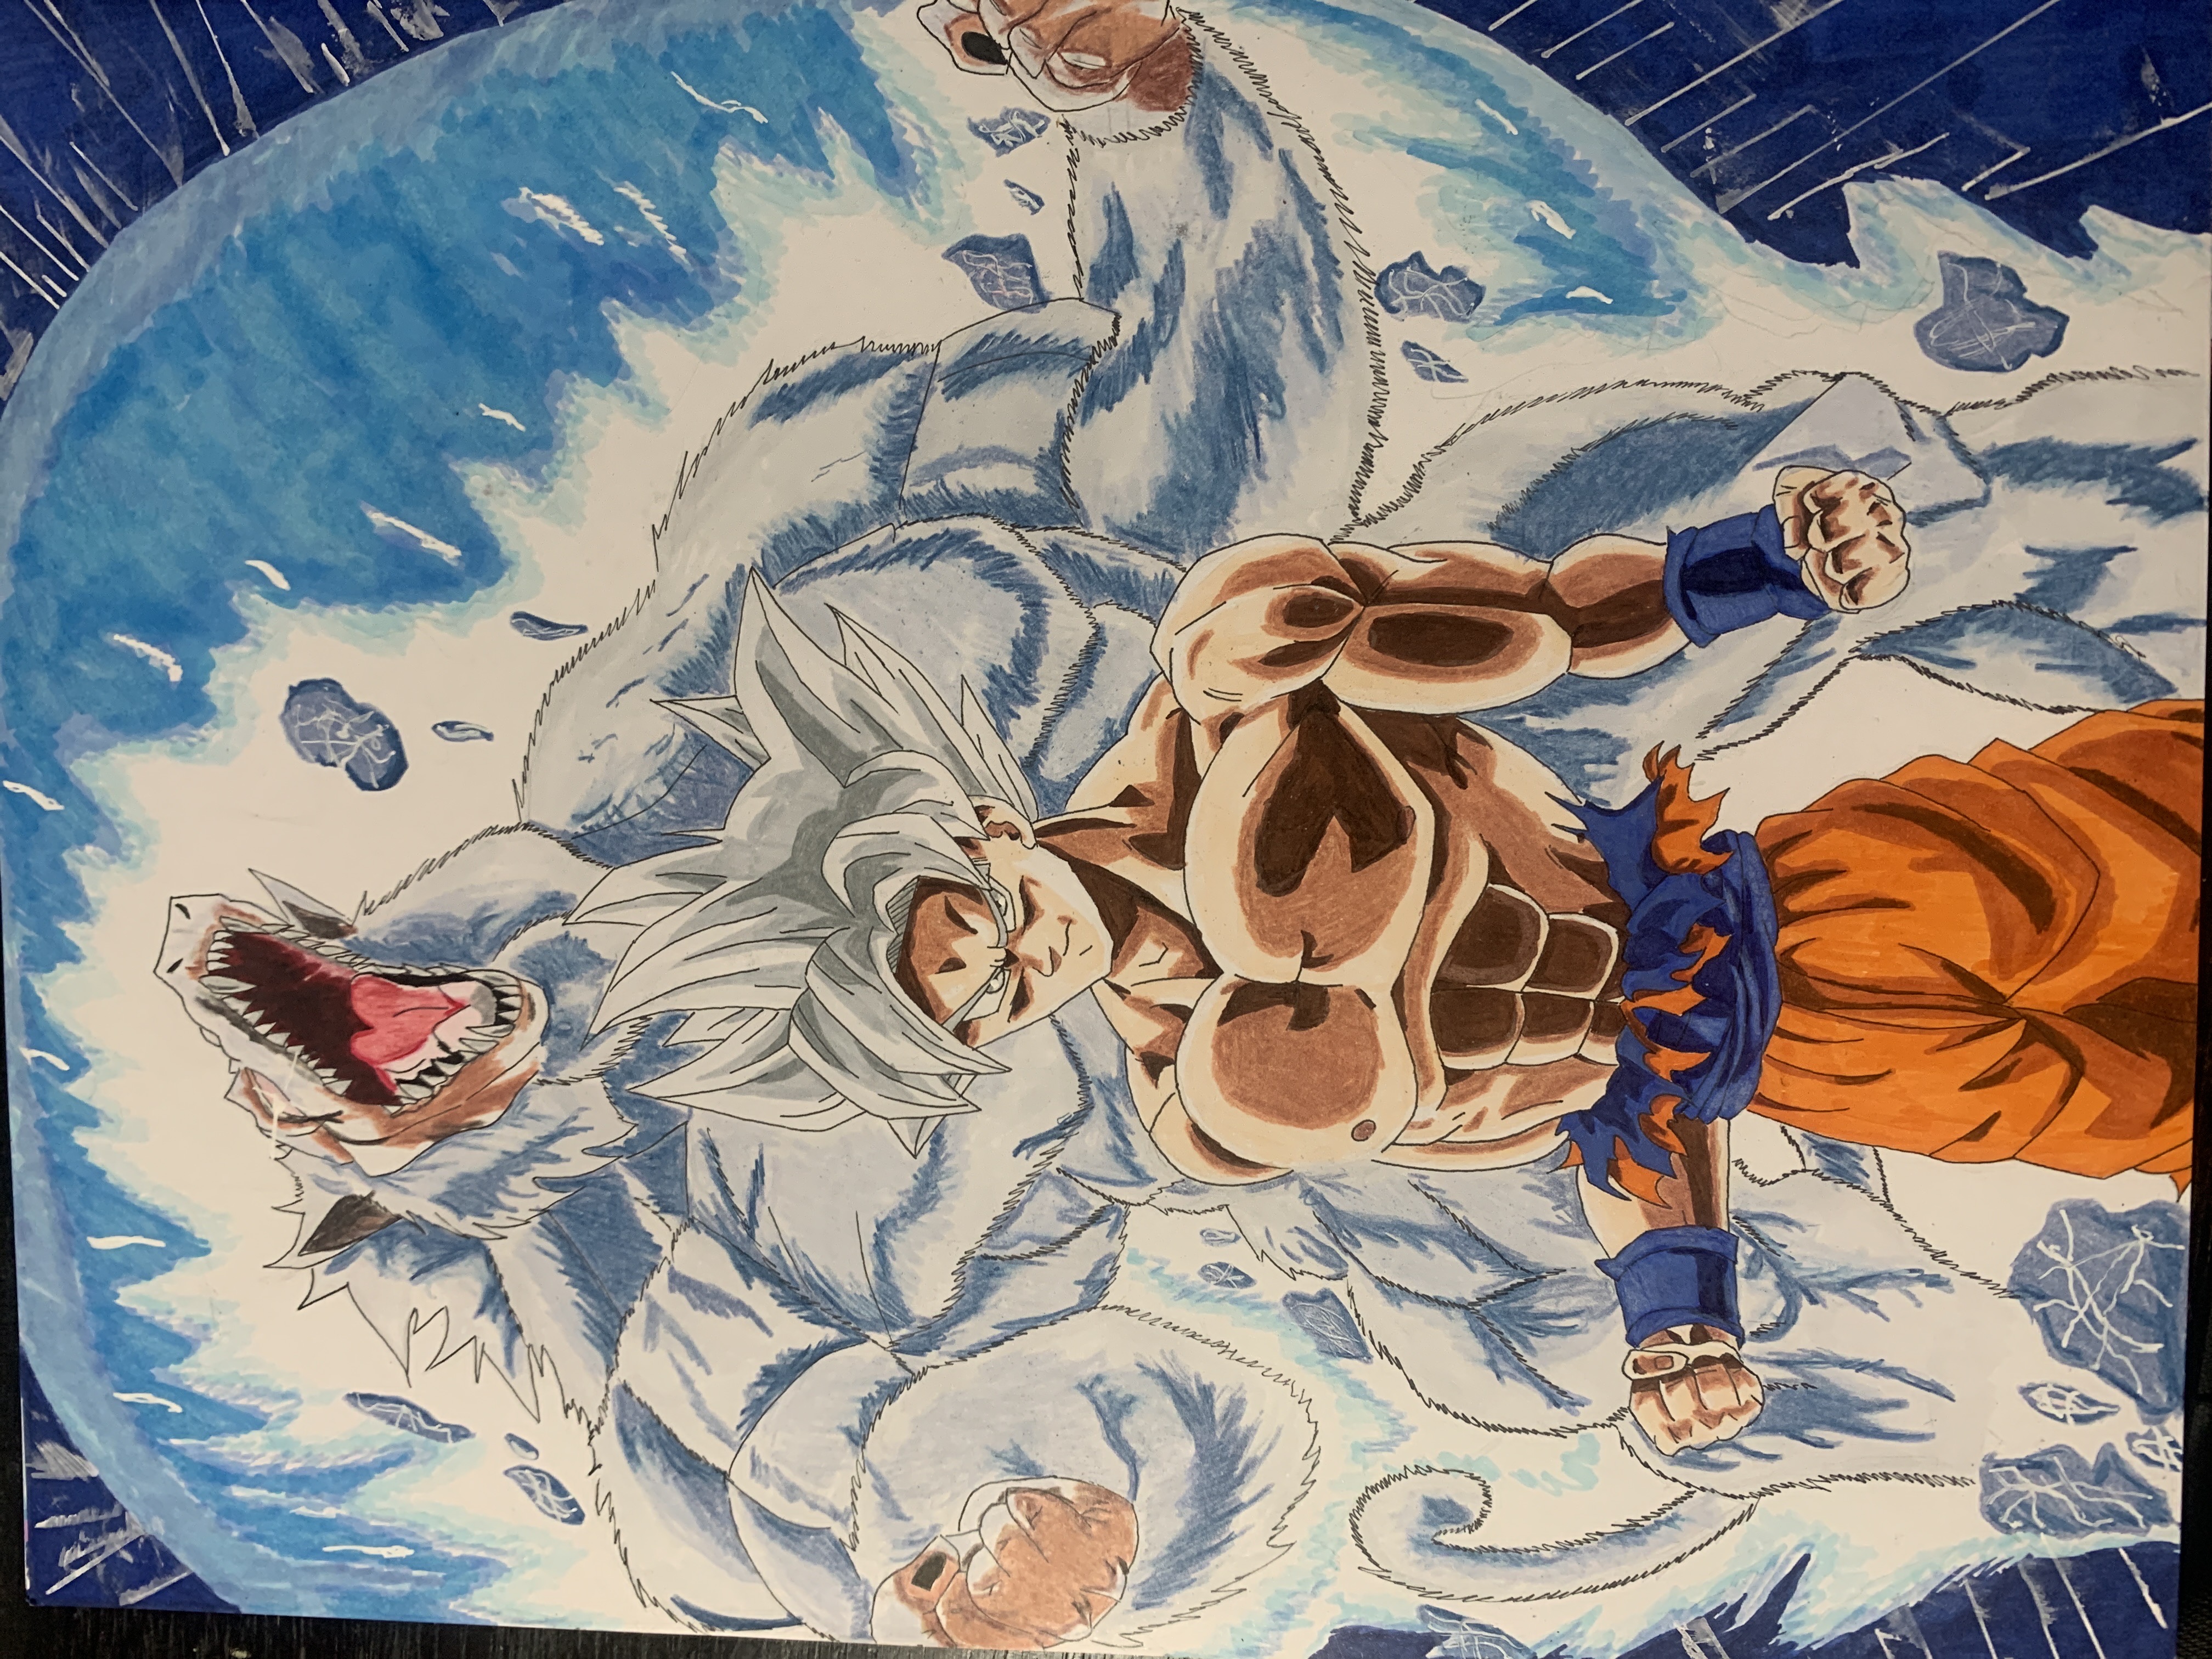 Goku mastered ultra instinct great ape by arkhamknight17 on DeviantArt